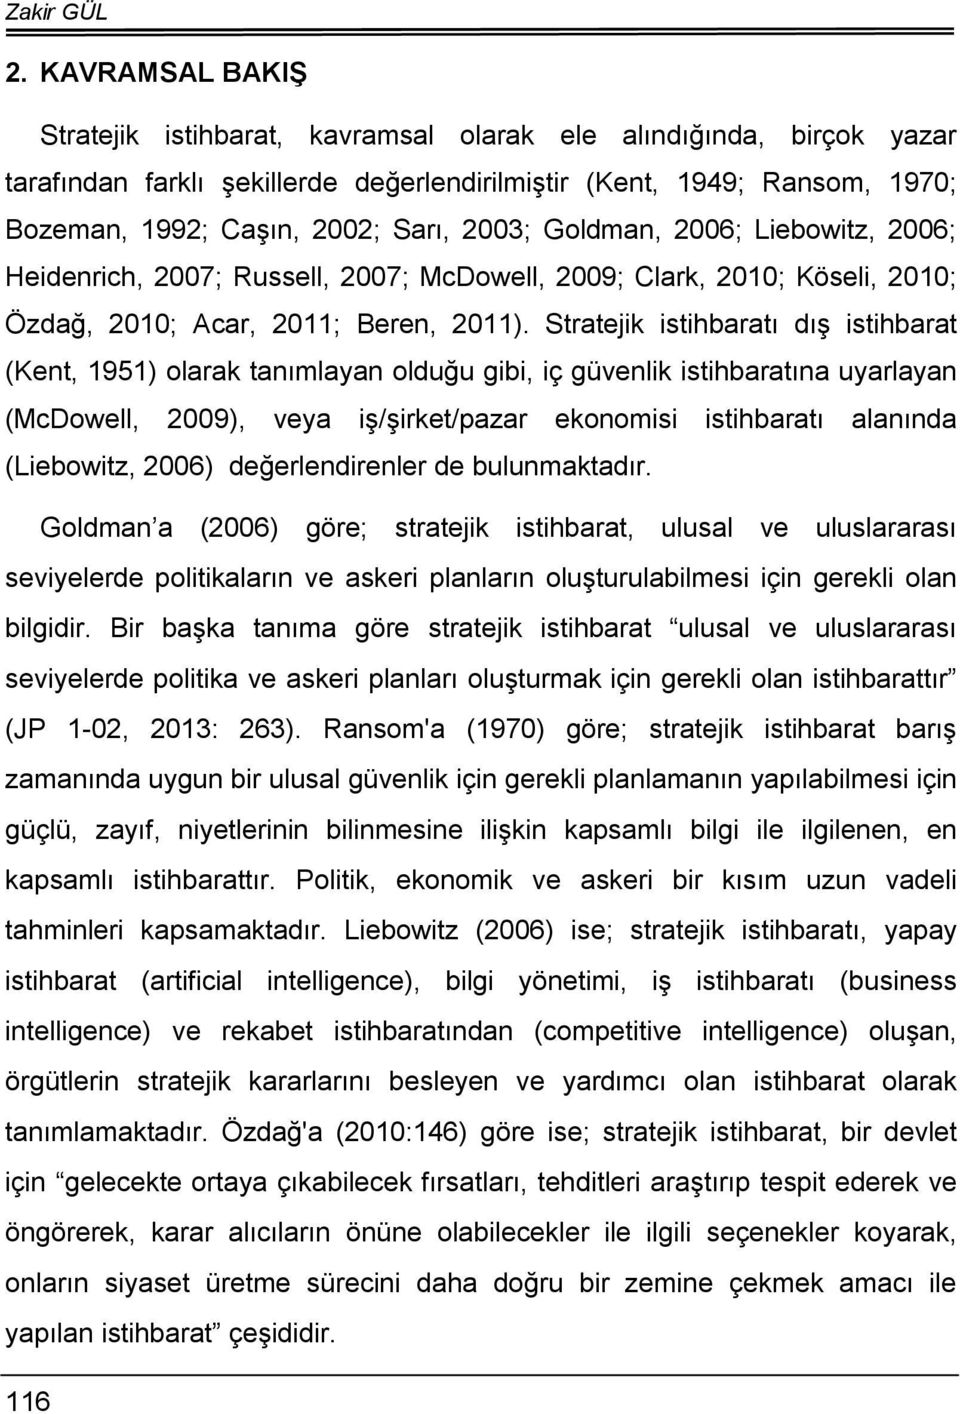 2003; Goldman, 2006; Liebowitz, 2006; Heidenrich, 2007; Russell, 2007; McDowell, 2009; Clark, 2010; Köseli, 2010; Özdağ, 2010; Acar, 2011; Beren, 2011).